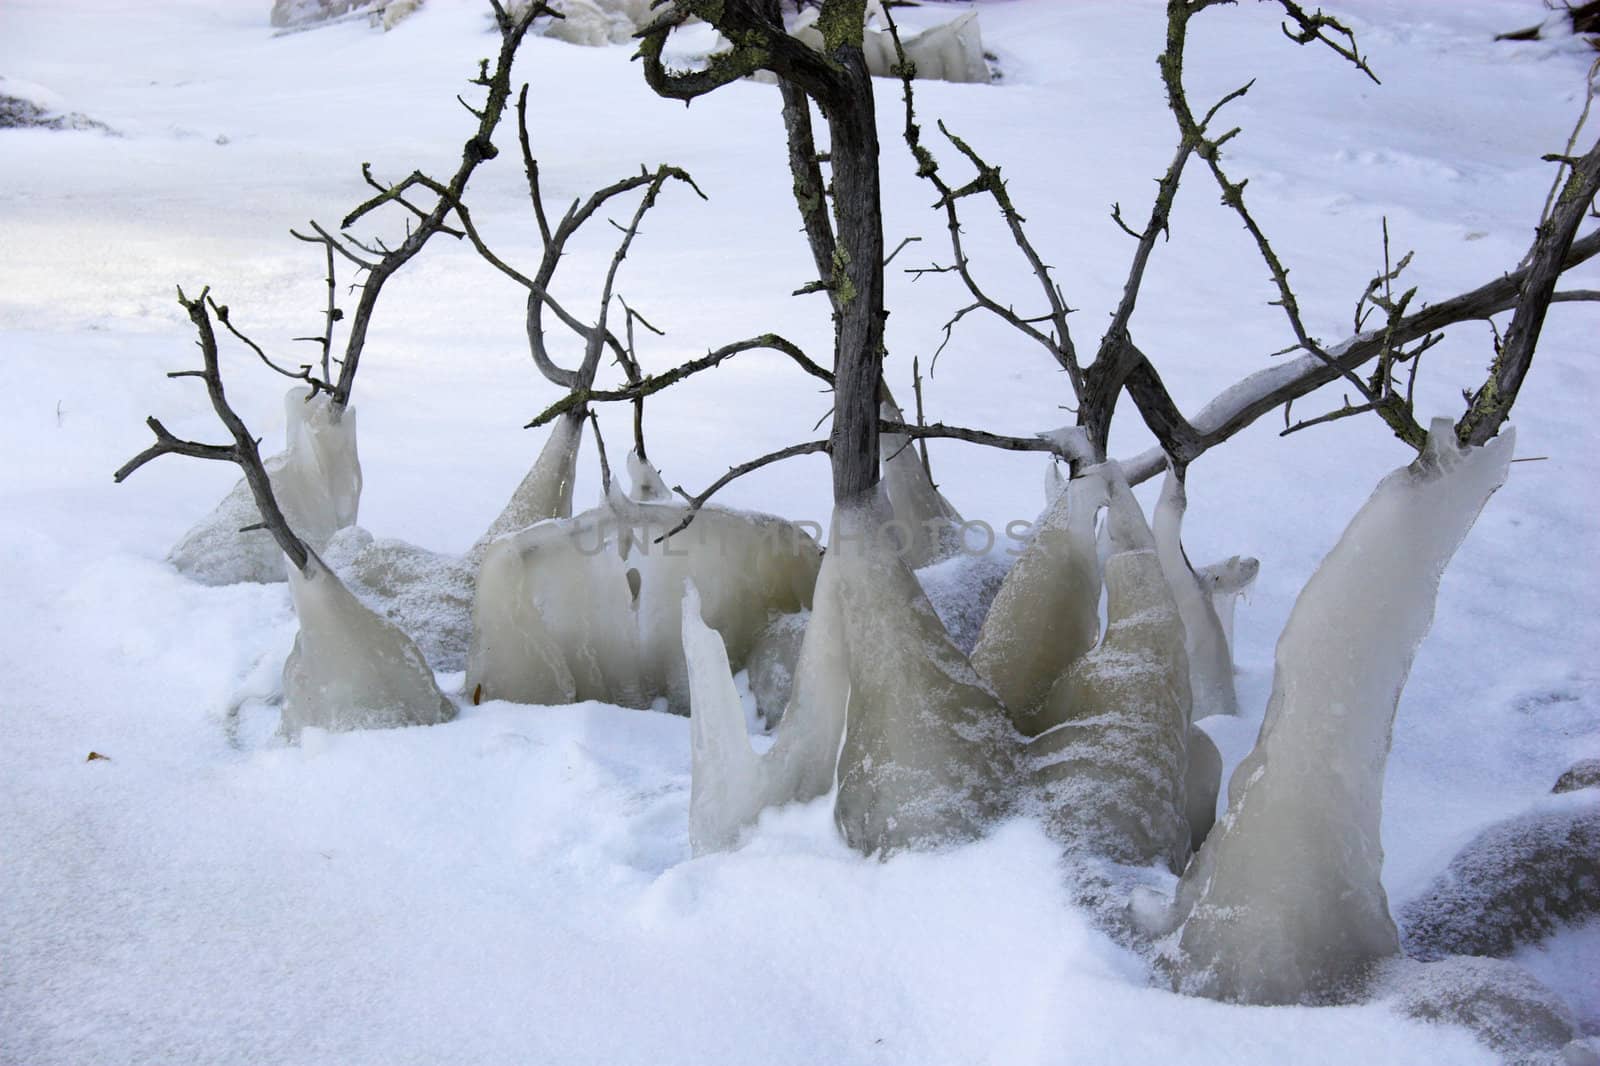 Iced up trees by georgeburba